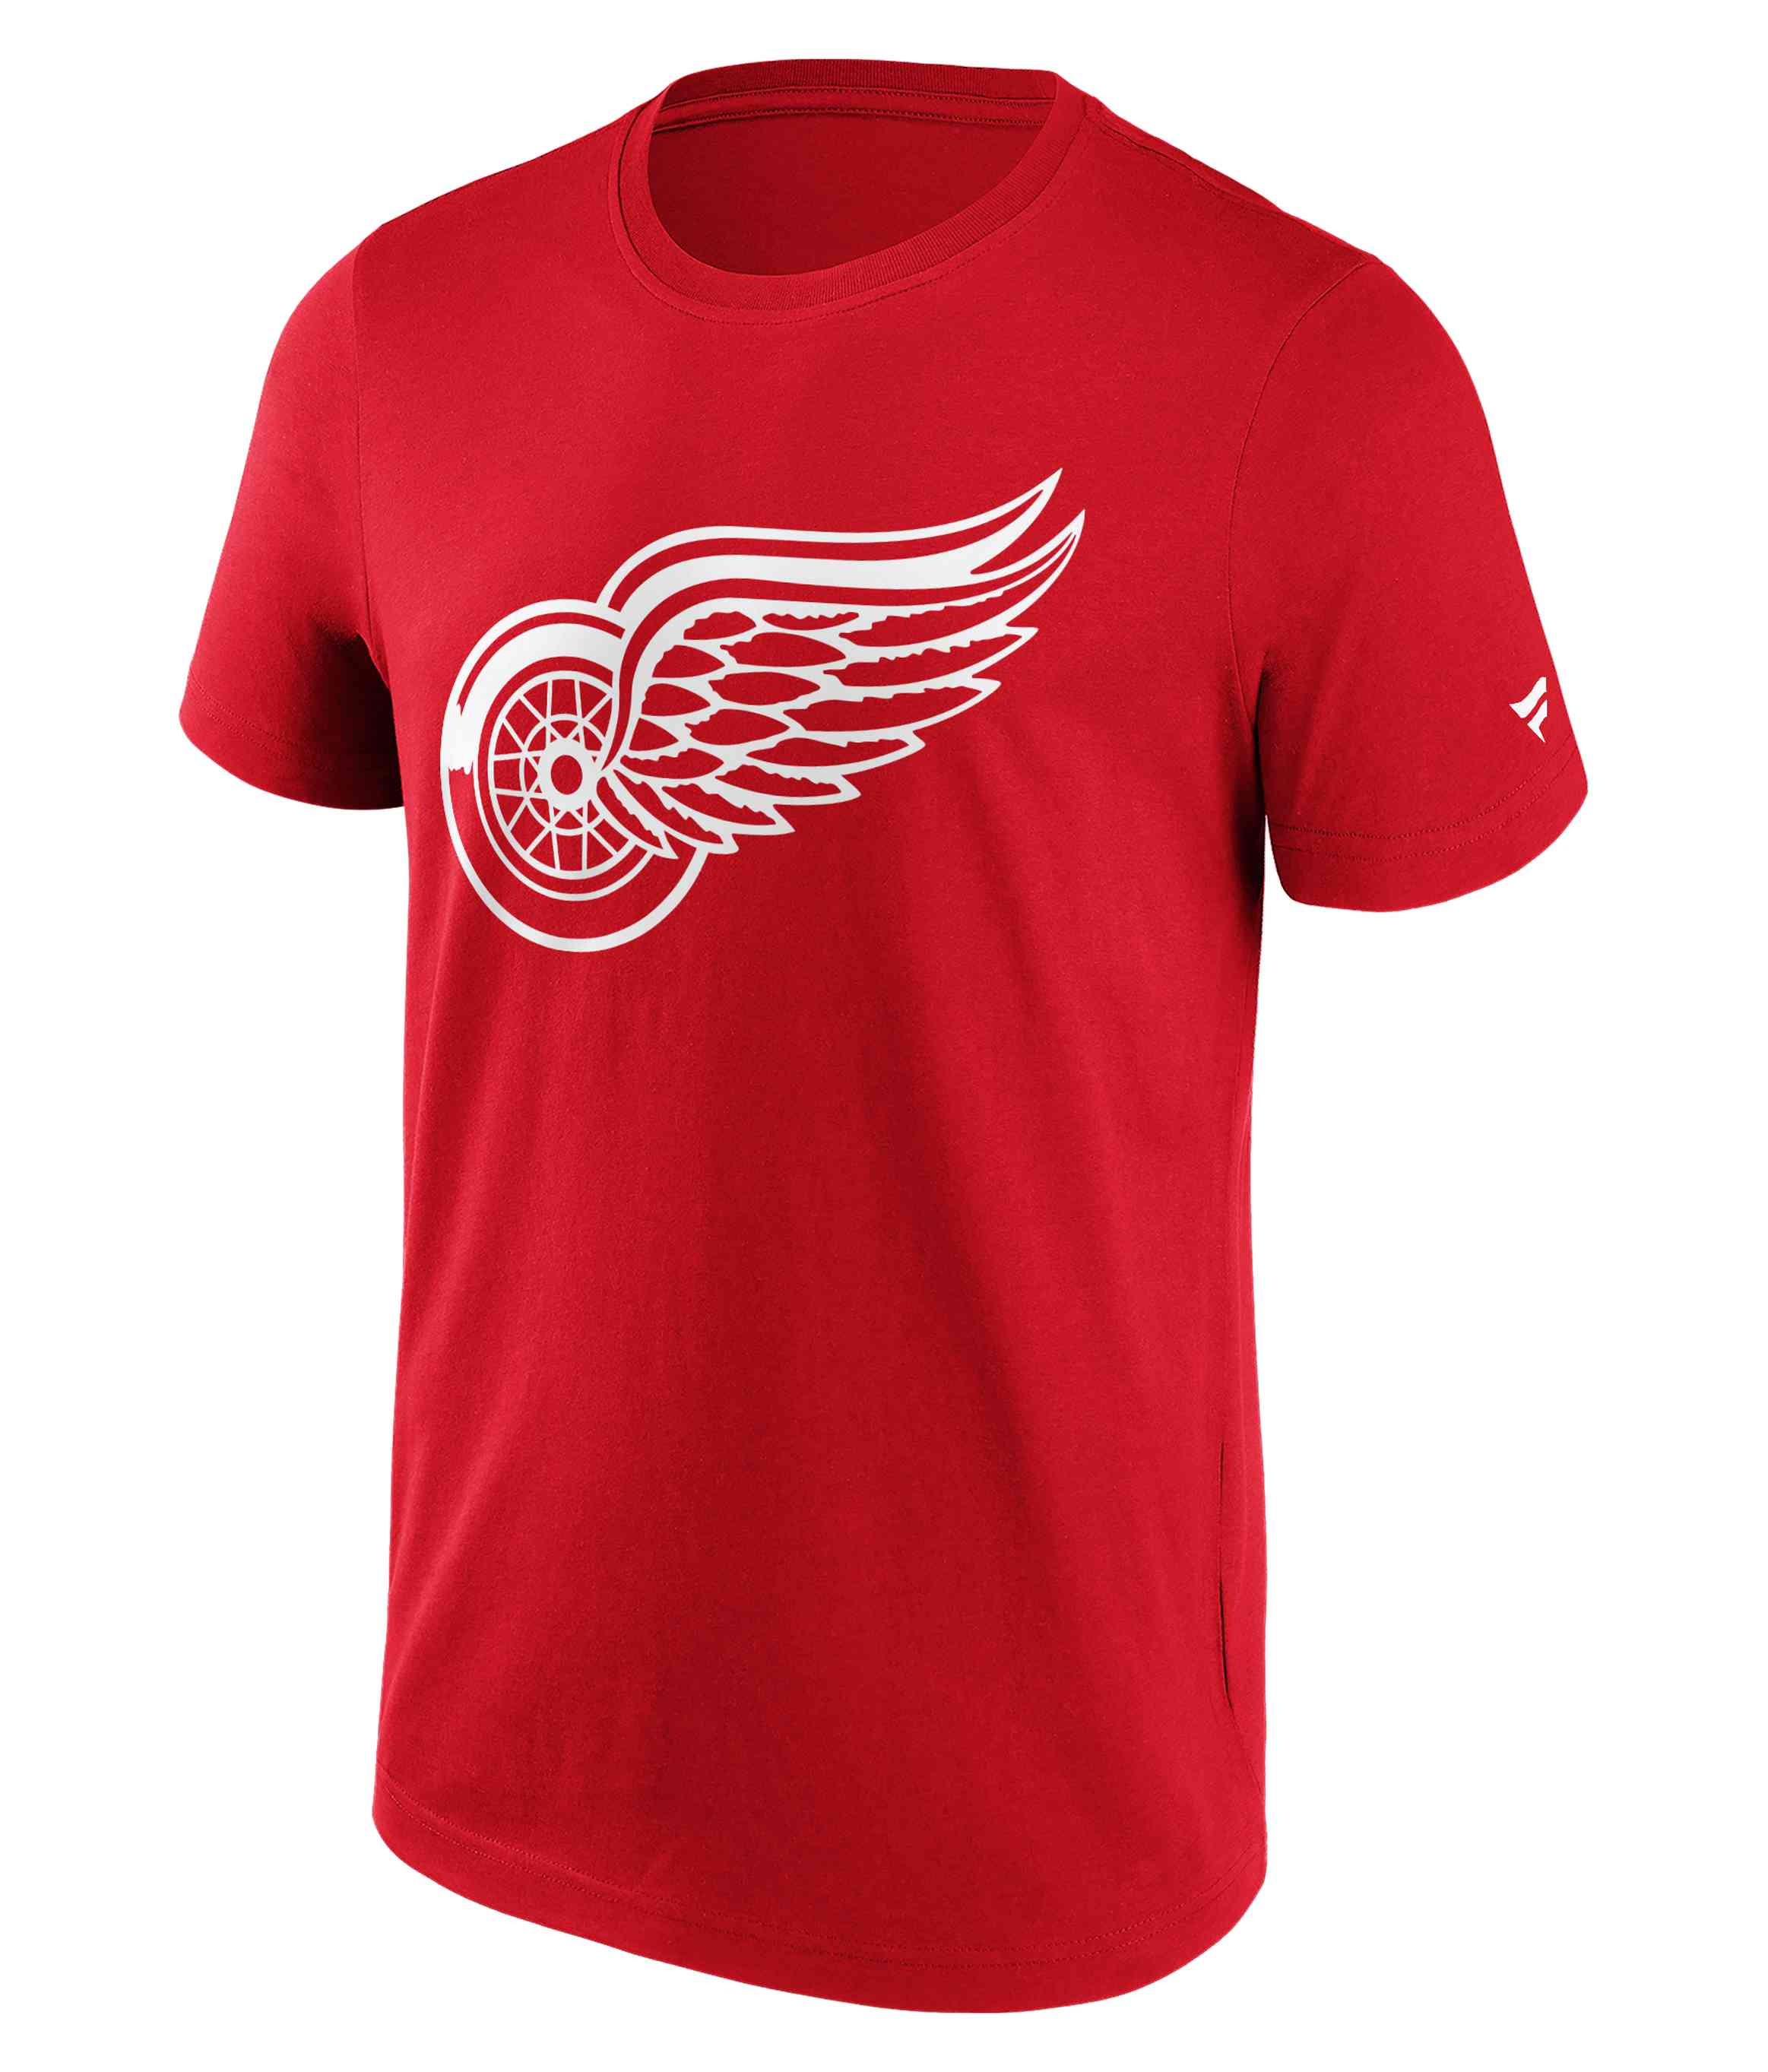 Fanatics - NHL Detroit Redwings Primary Logo Graphic T-Shirt